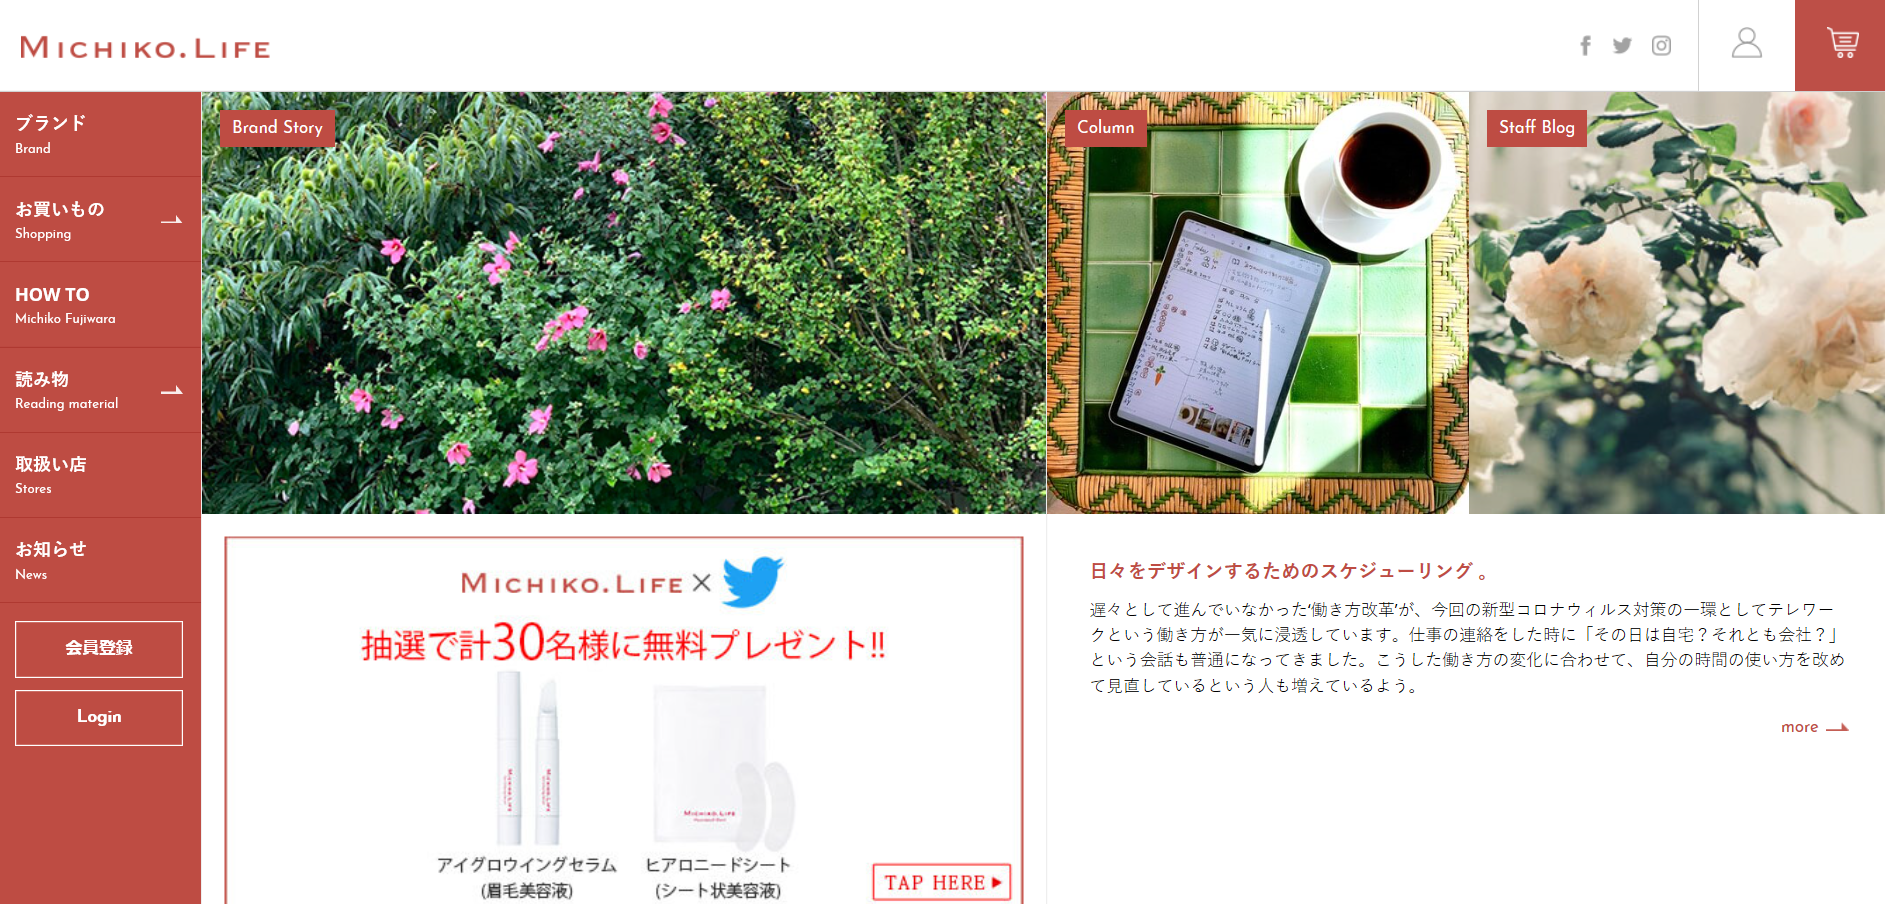 「MICHIKO.LIFE」のポップアップストアが期間限定でオープン